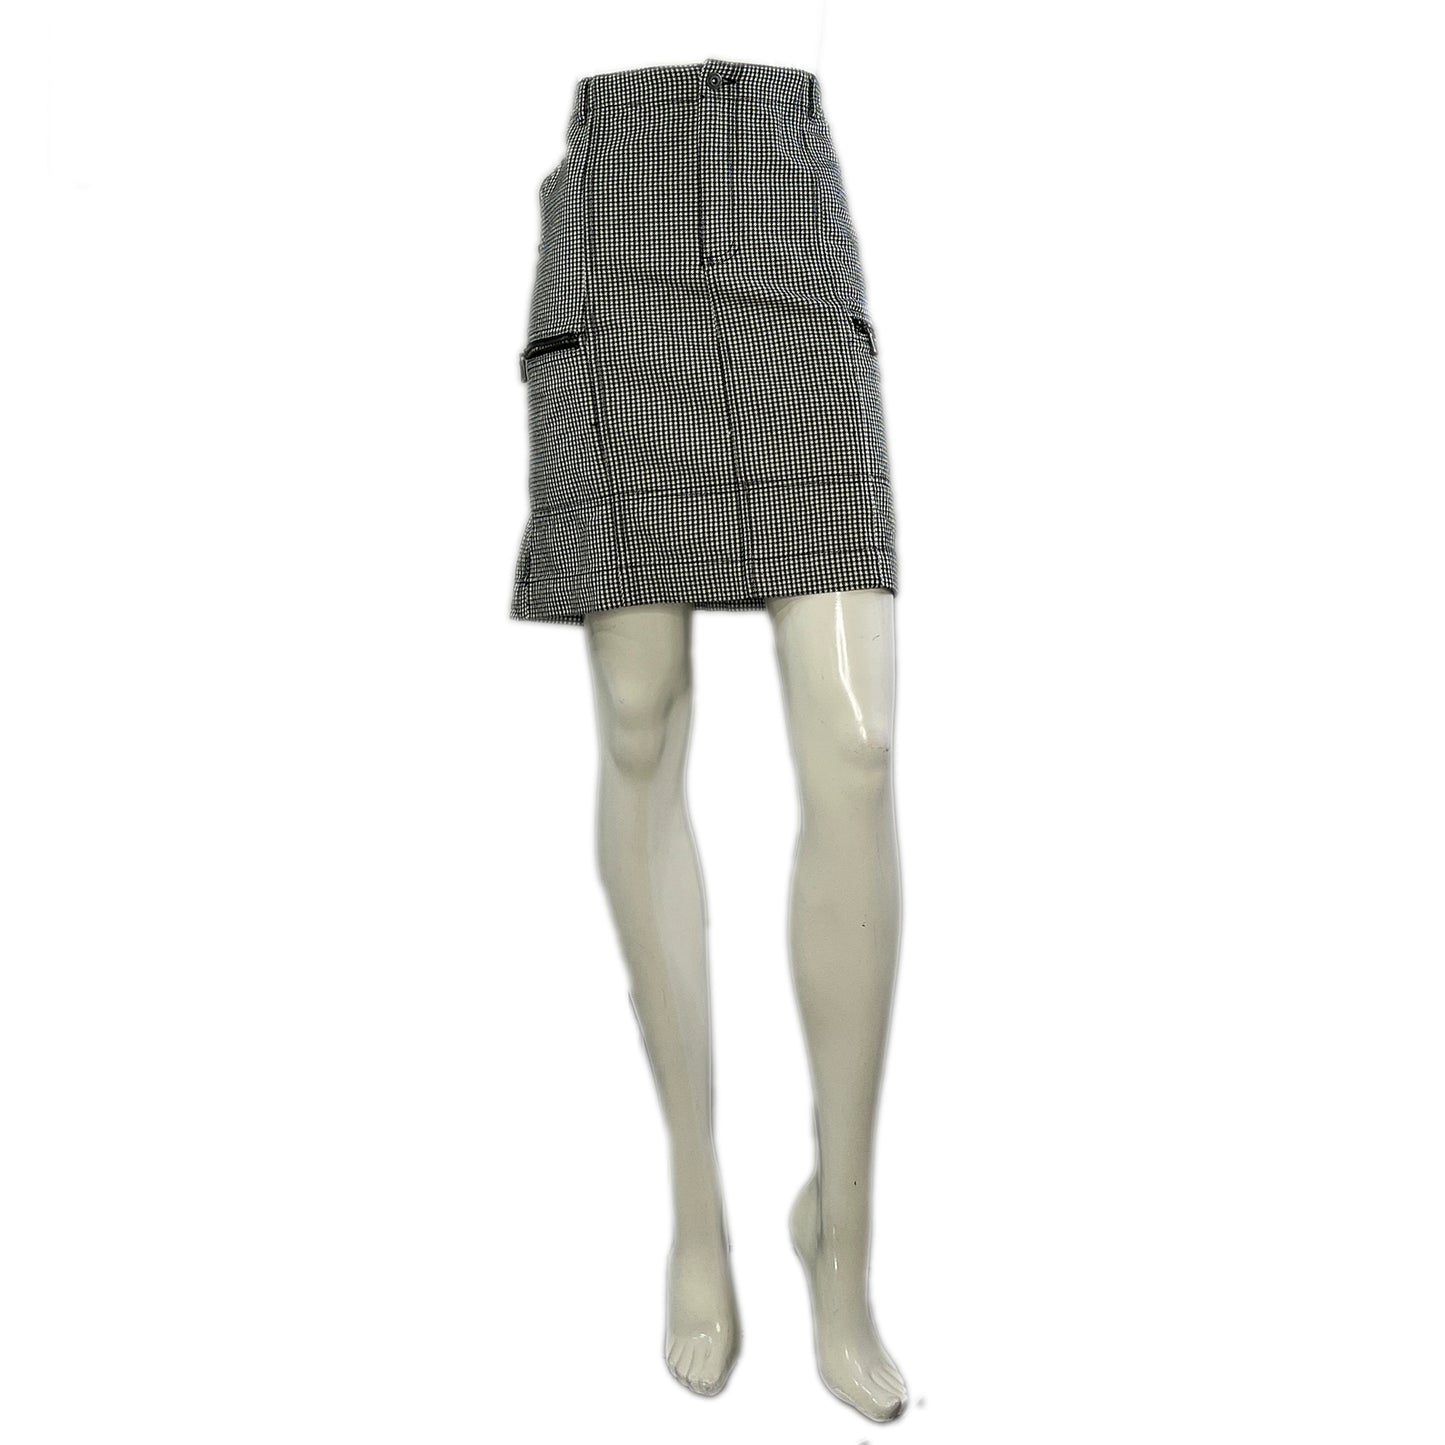 Liz Claiborne Skirt Above-Knee Button _ Zipper Details Black, White Size 14 SKU 000268-7